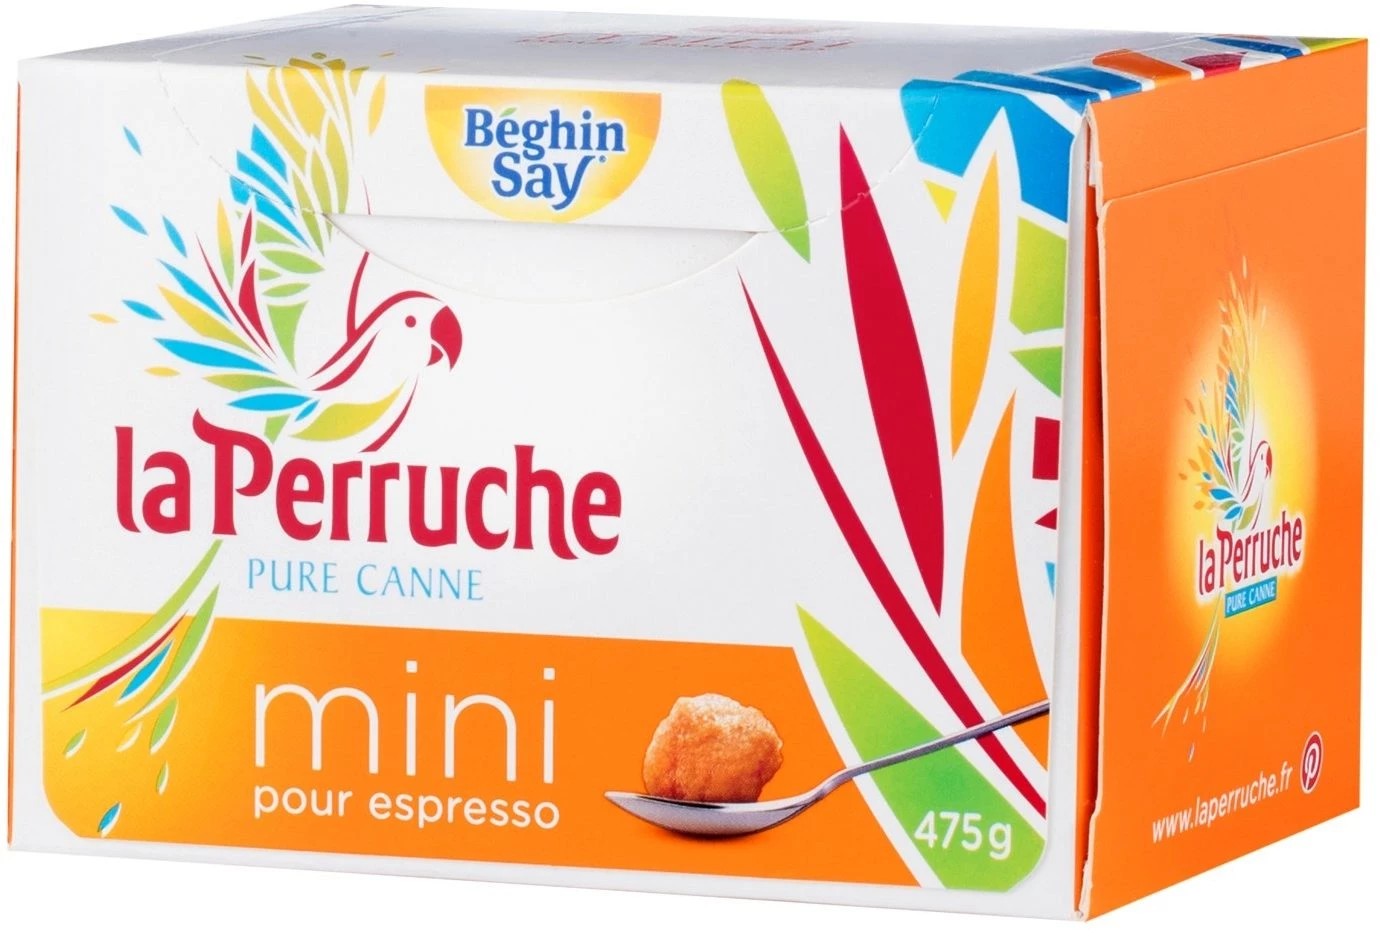 Mini sucre de canne pour expresso 475g - BEGHIN SAY